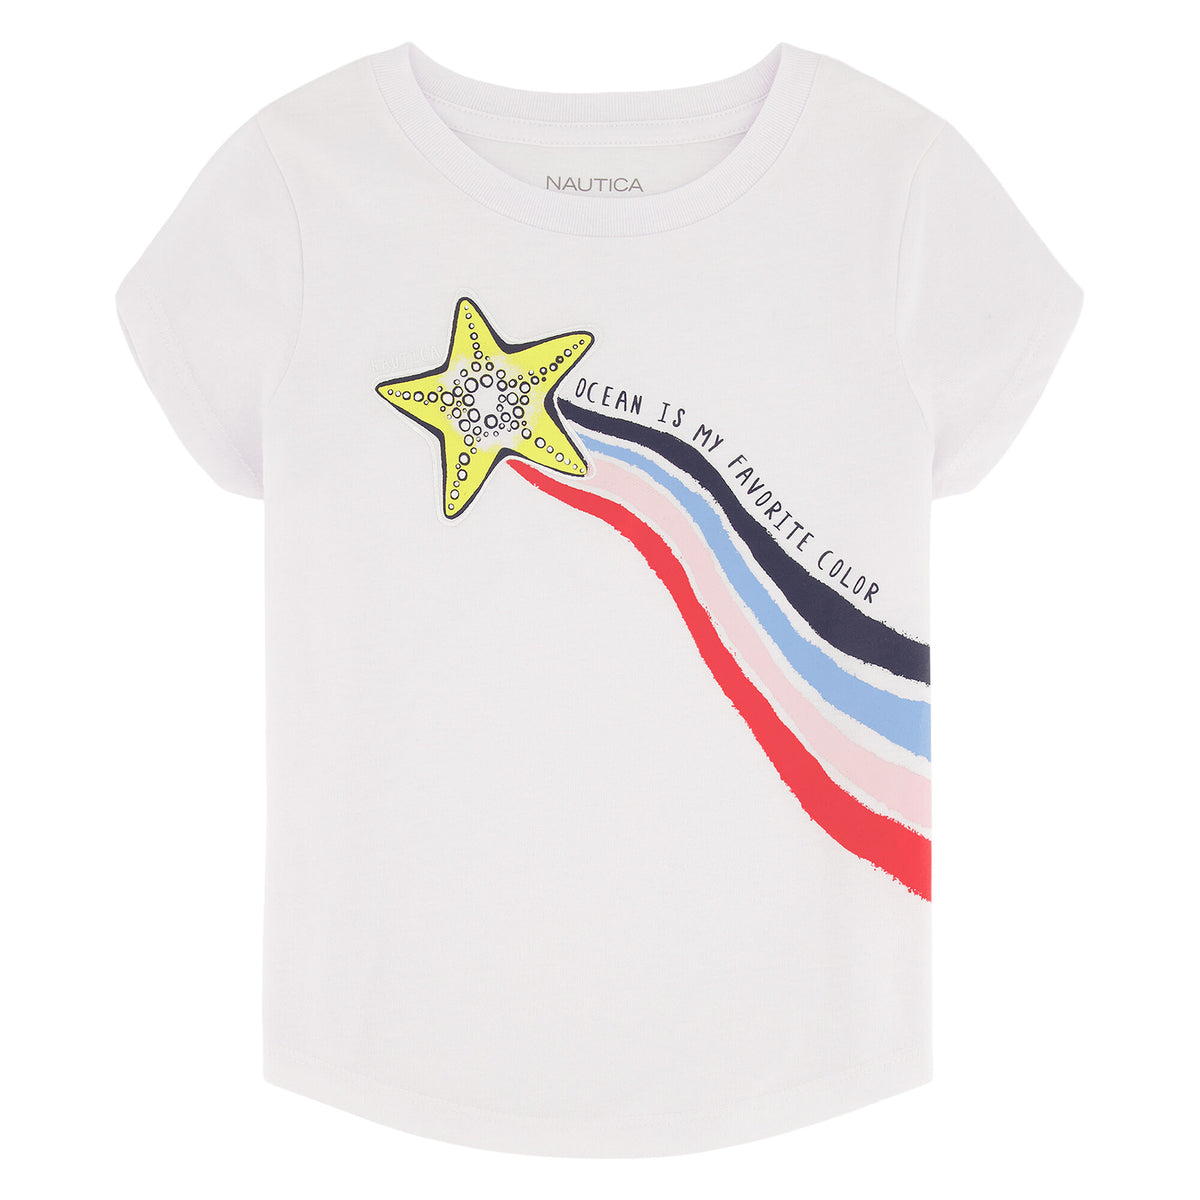 Nautica Toddler Girls' Shooting Star T-Shirt (2T-4T) Antique White Wash